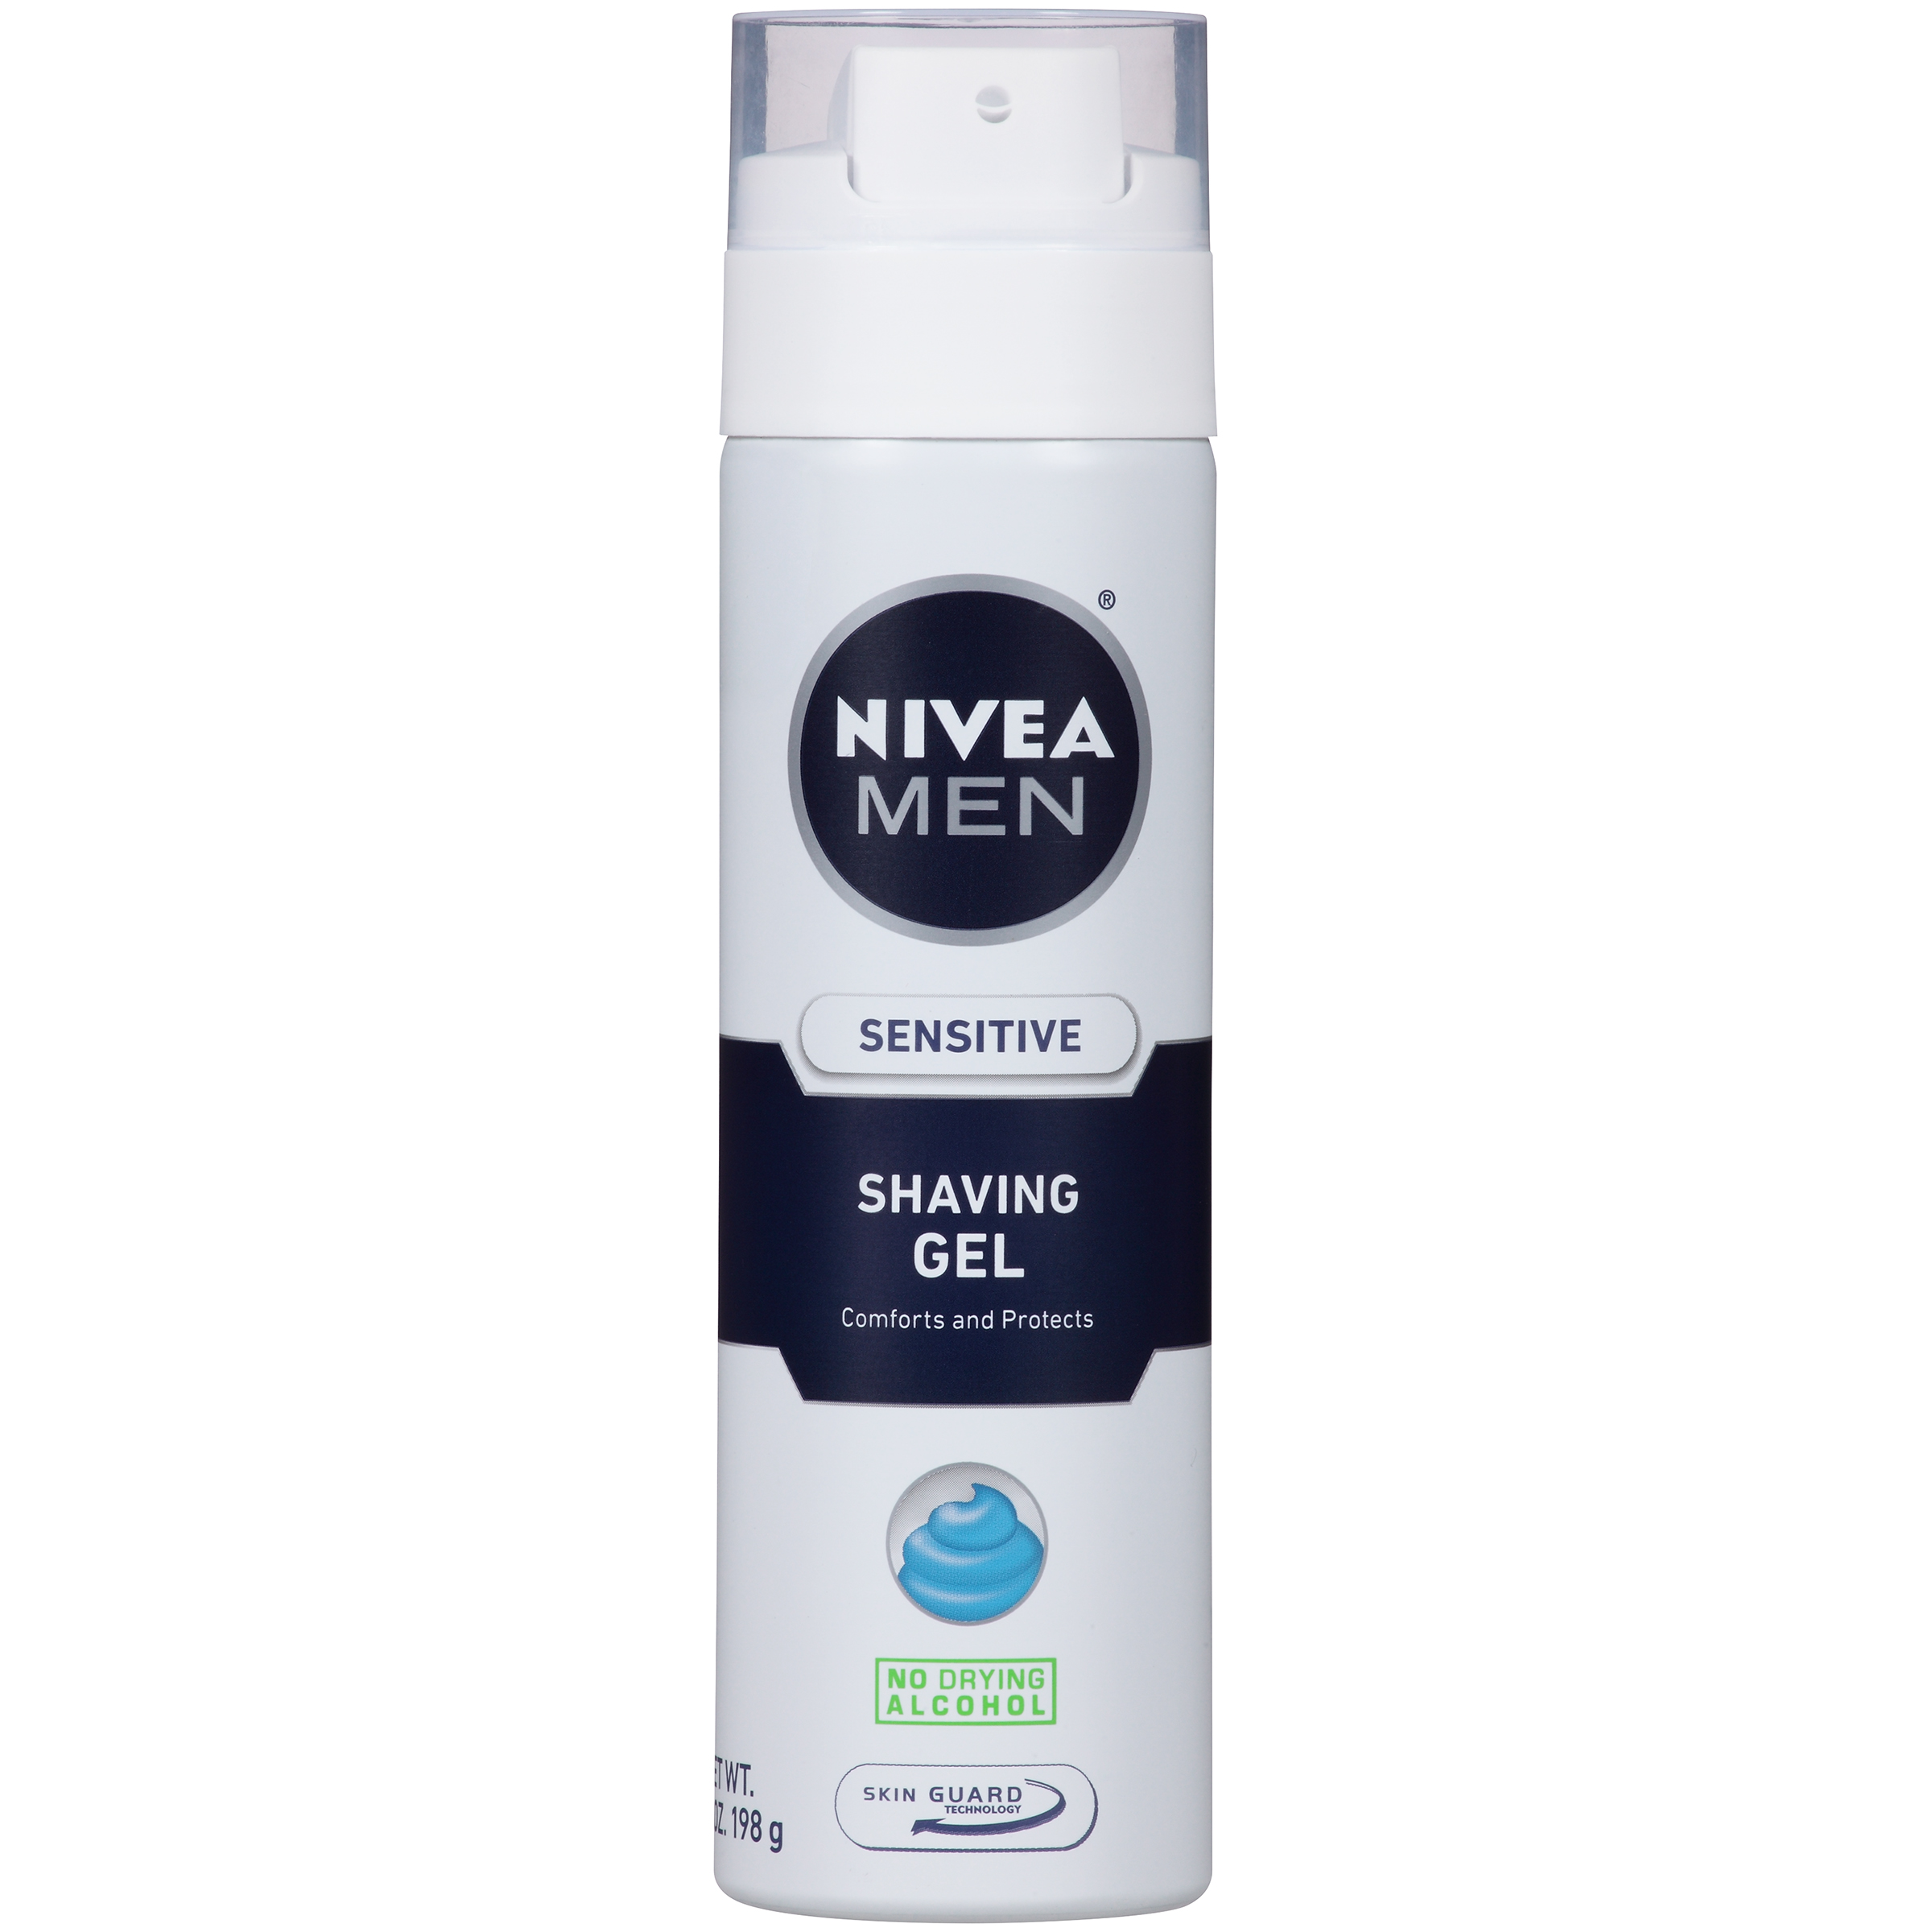 Nivea For Men Shaving Gel, Sensitive, 7 oz (198 g)